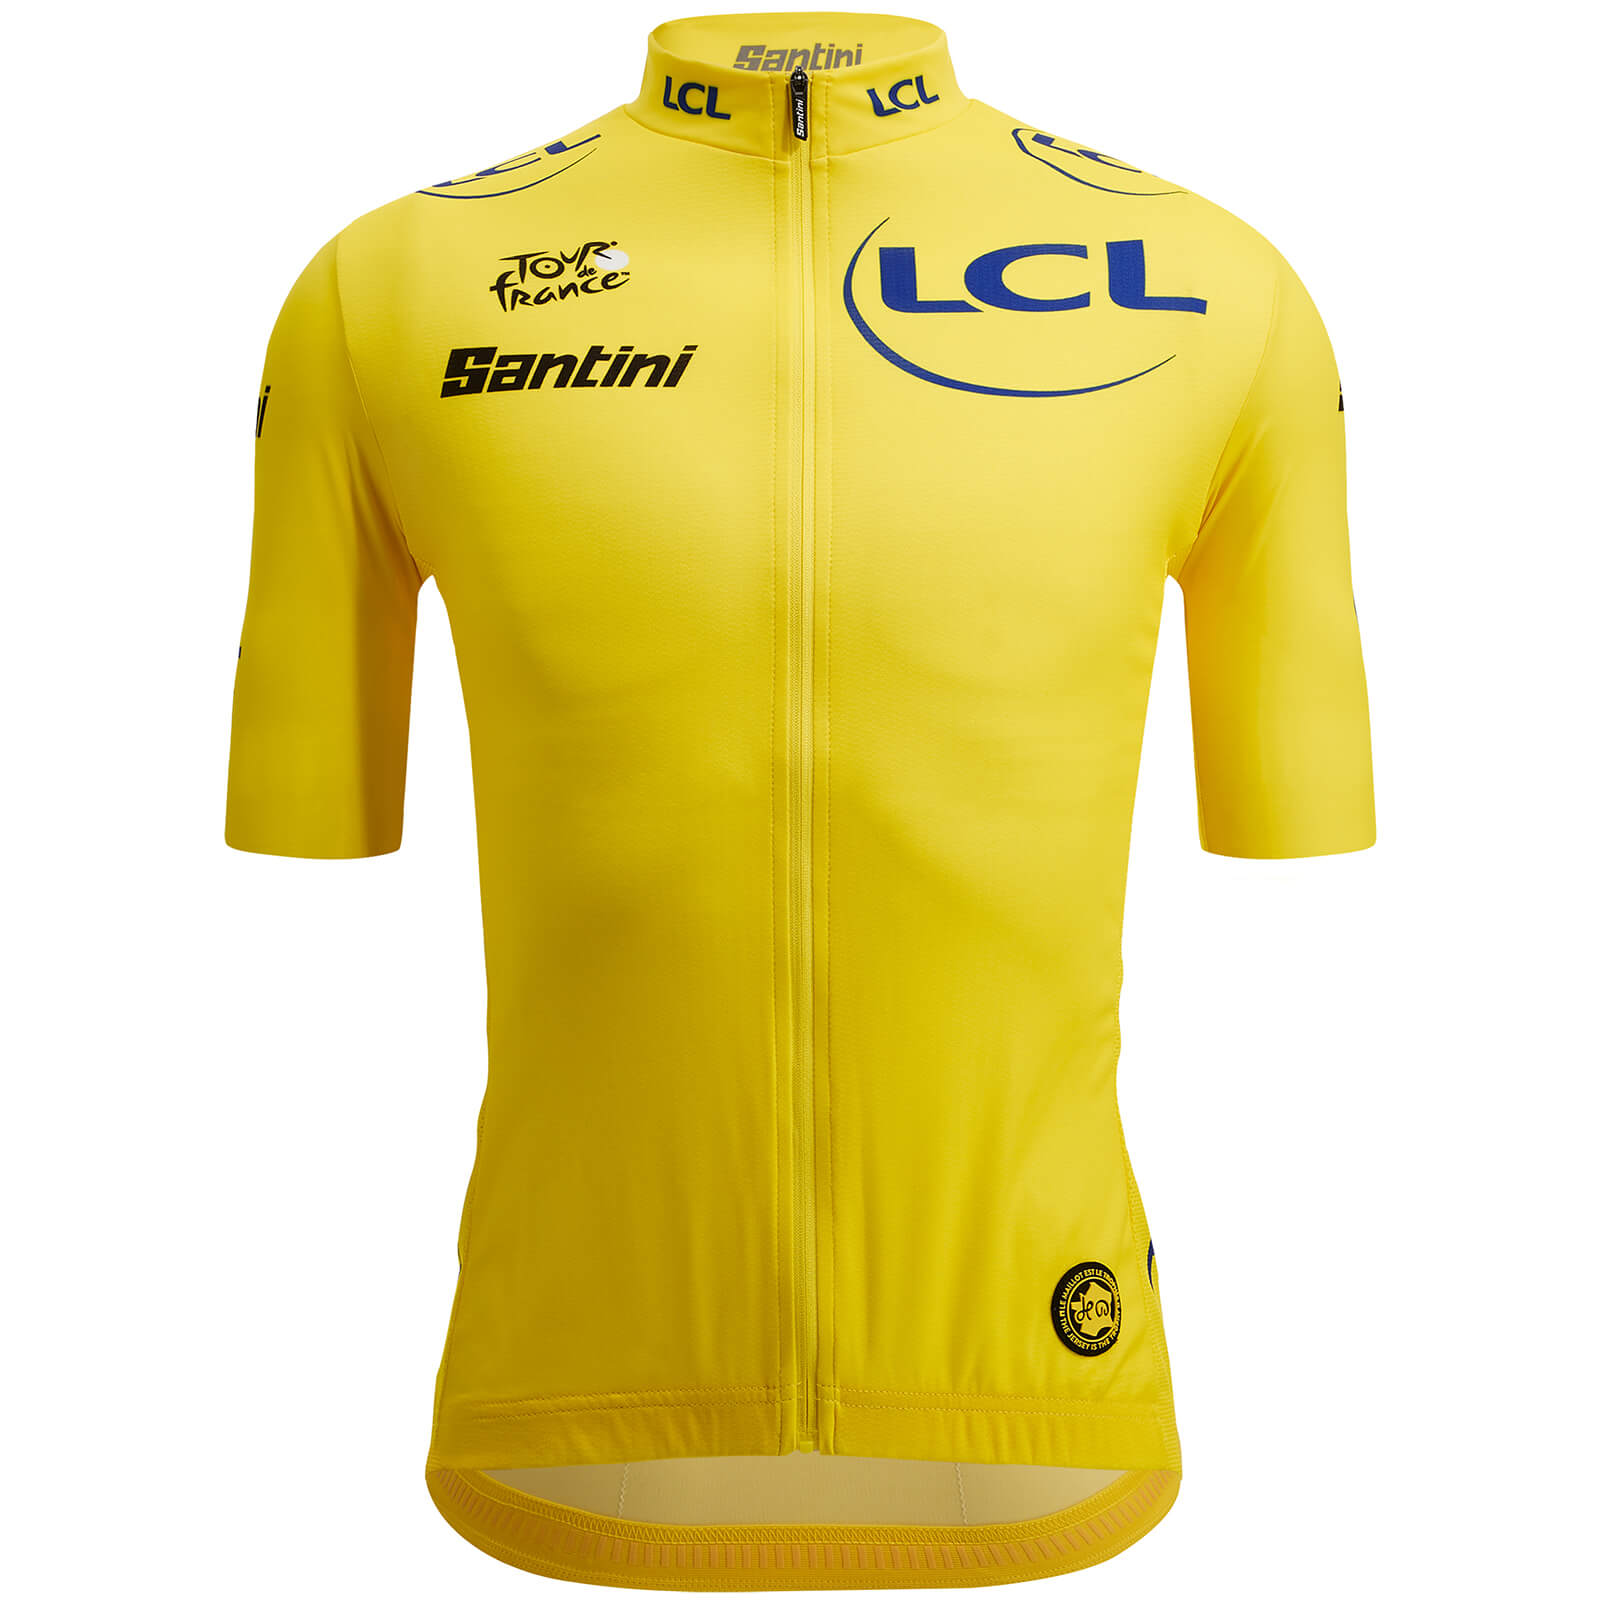 Santini Tour de France Replica Leaders Jersey - XL